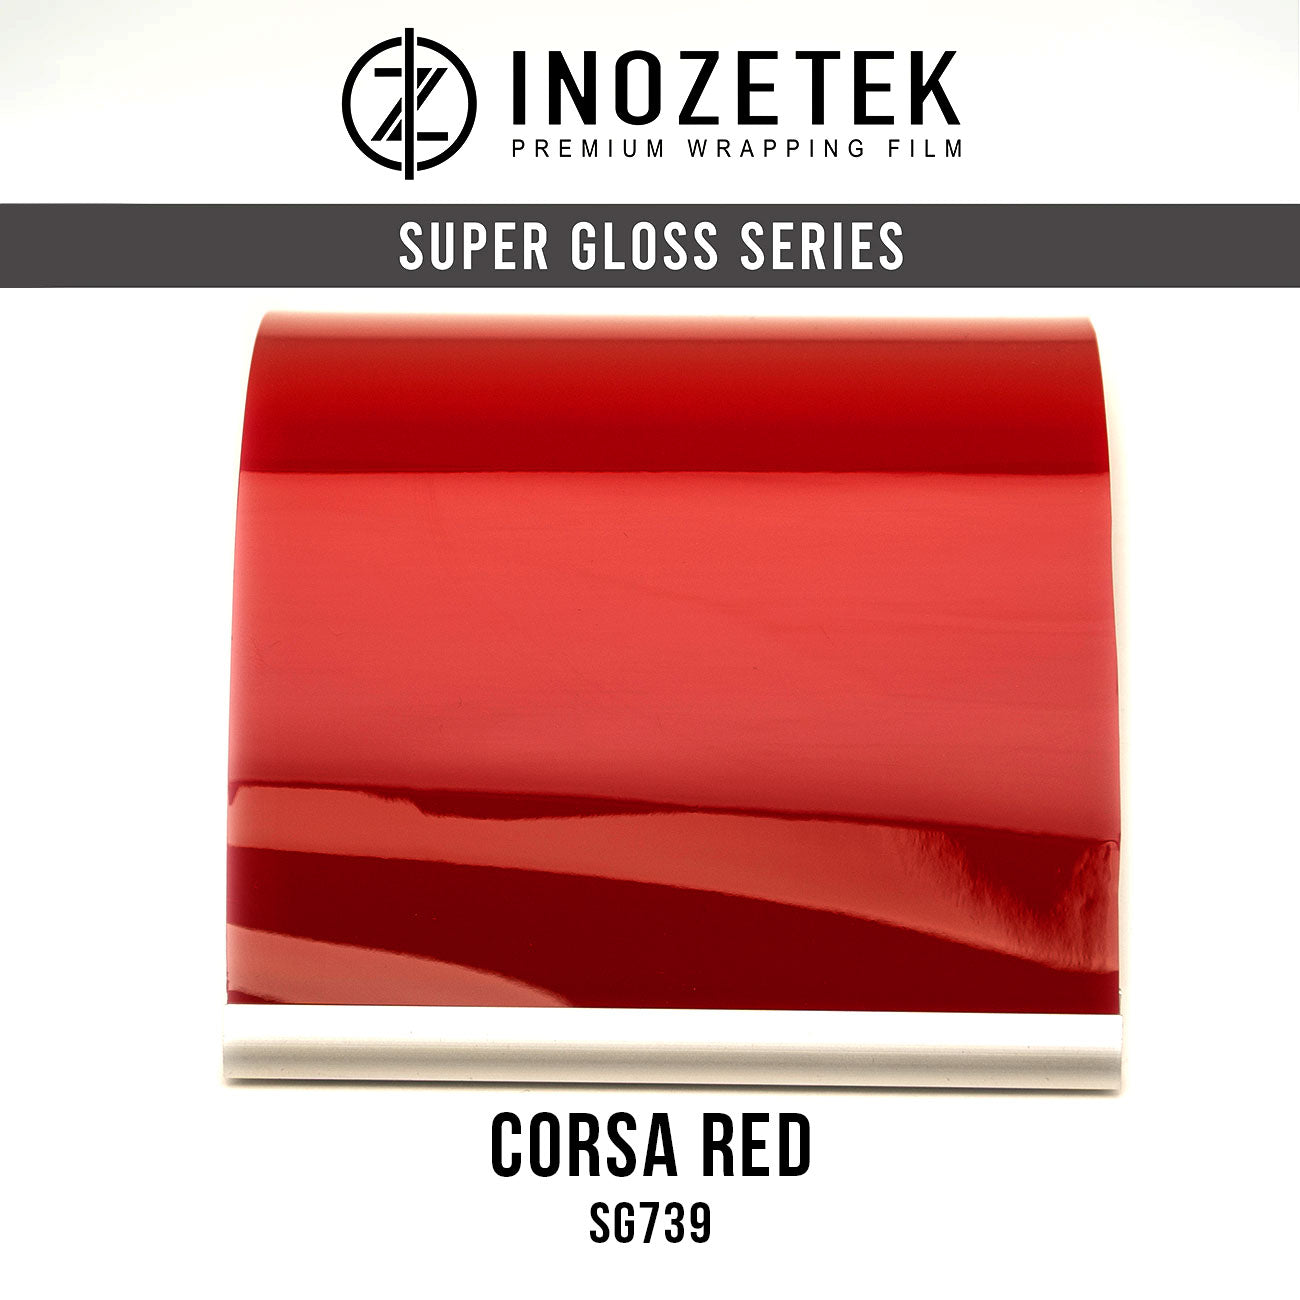 Super Gloss Corsa Red